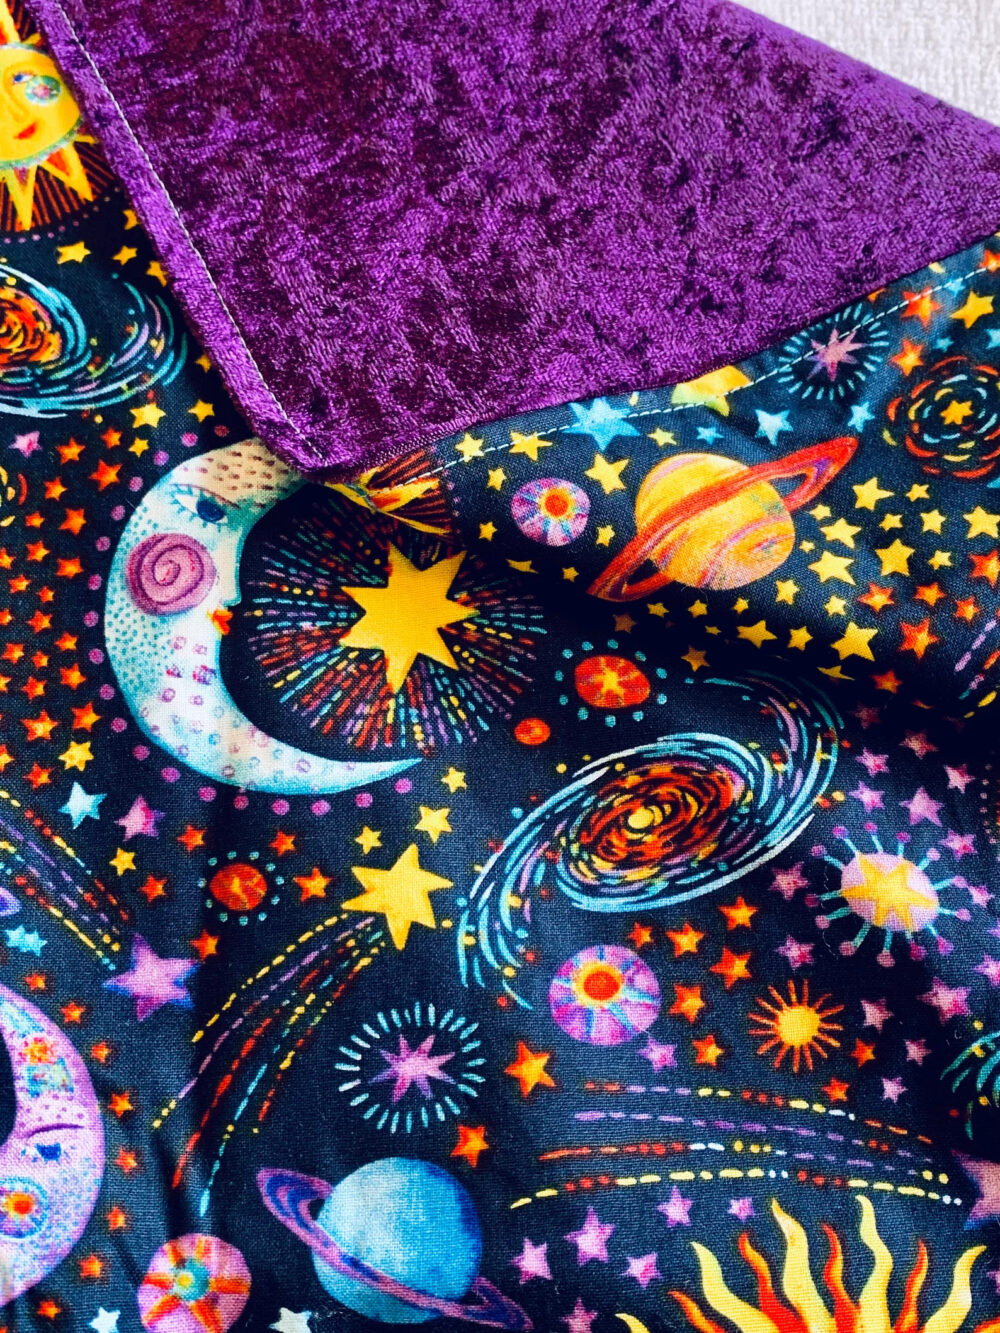 astronomy blanket